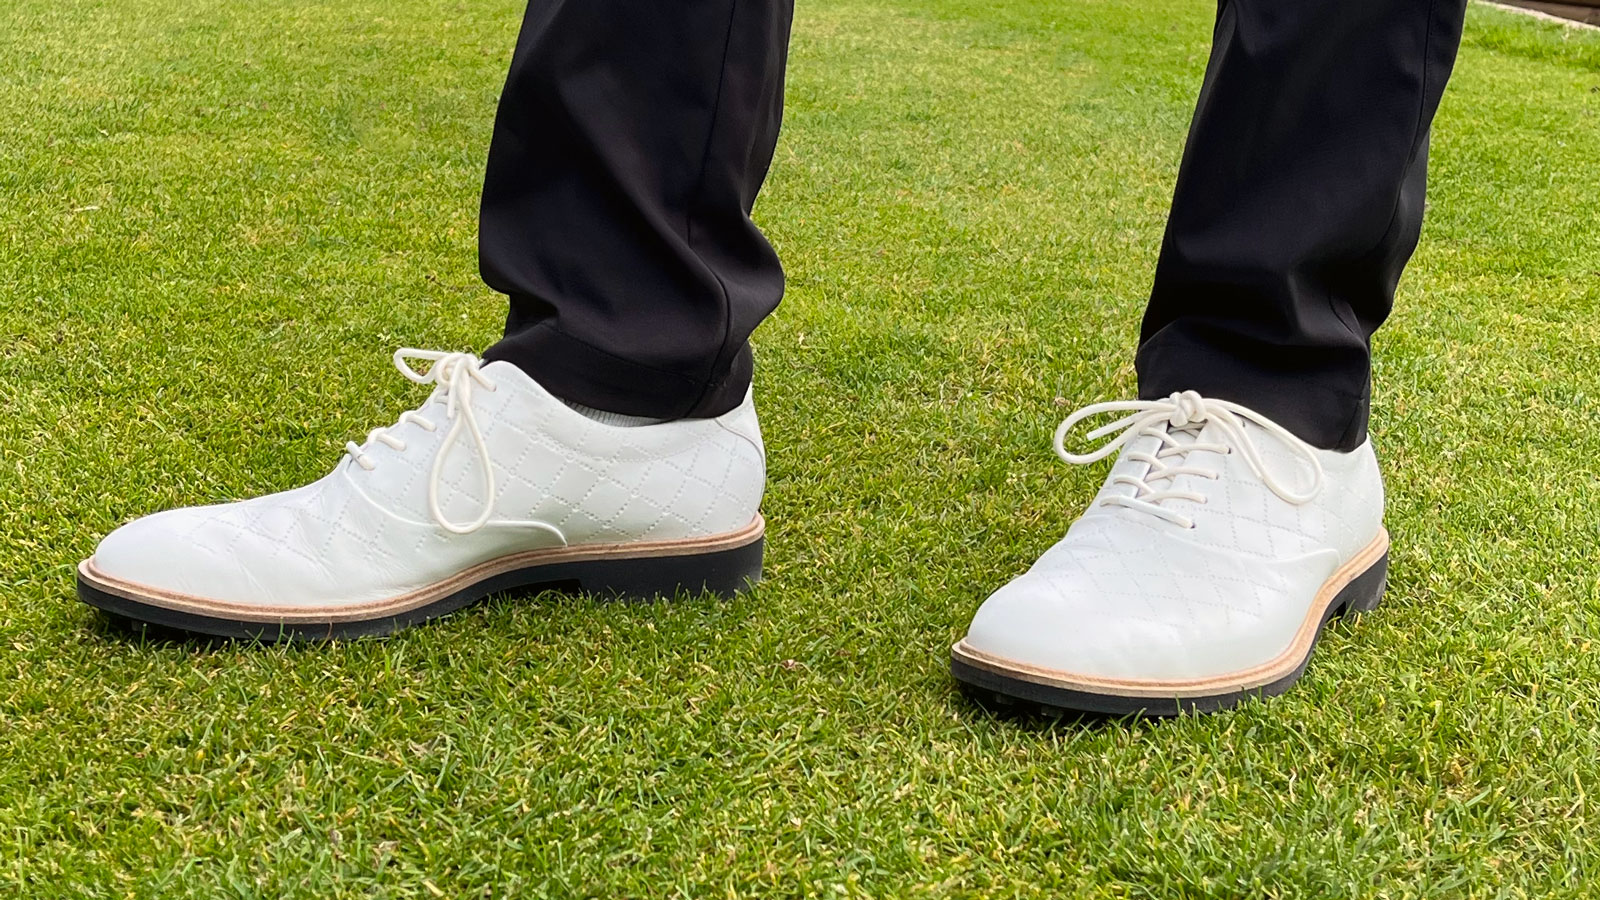 Ecco Golf Shoes Reviews